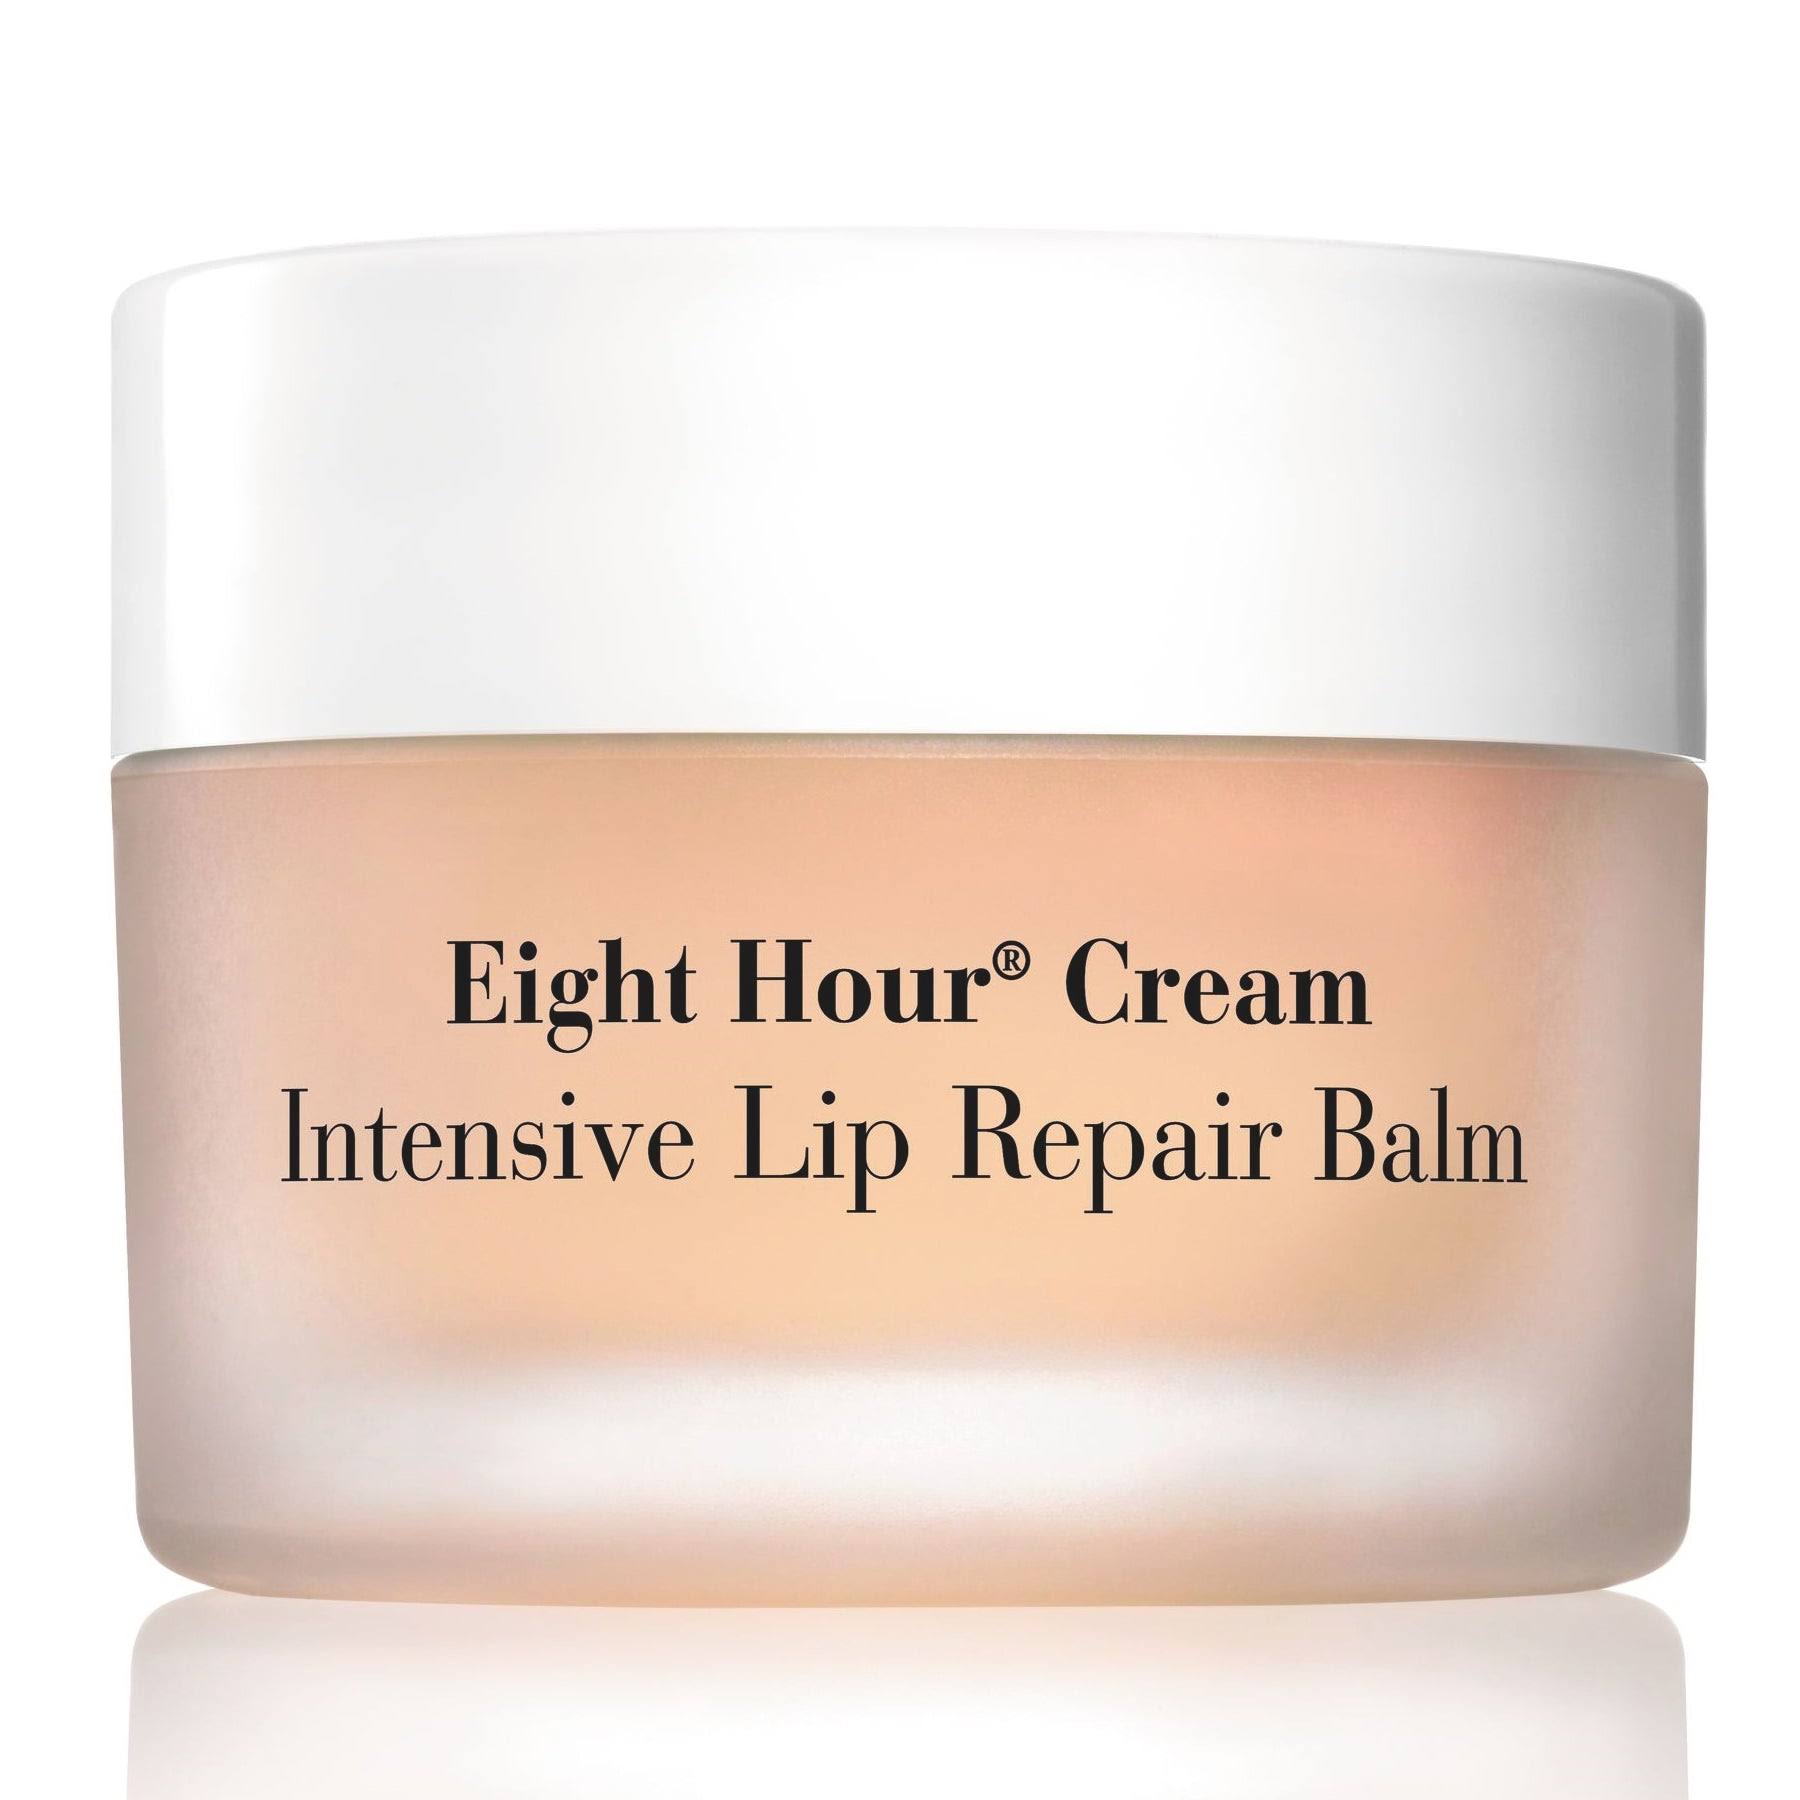 Elizabeth Arden Eight Hour Cream Intensive Lip Repair Balm - 11.6ml